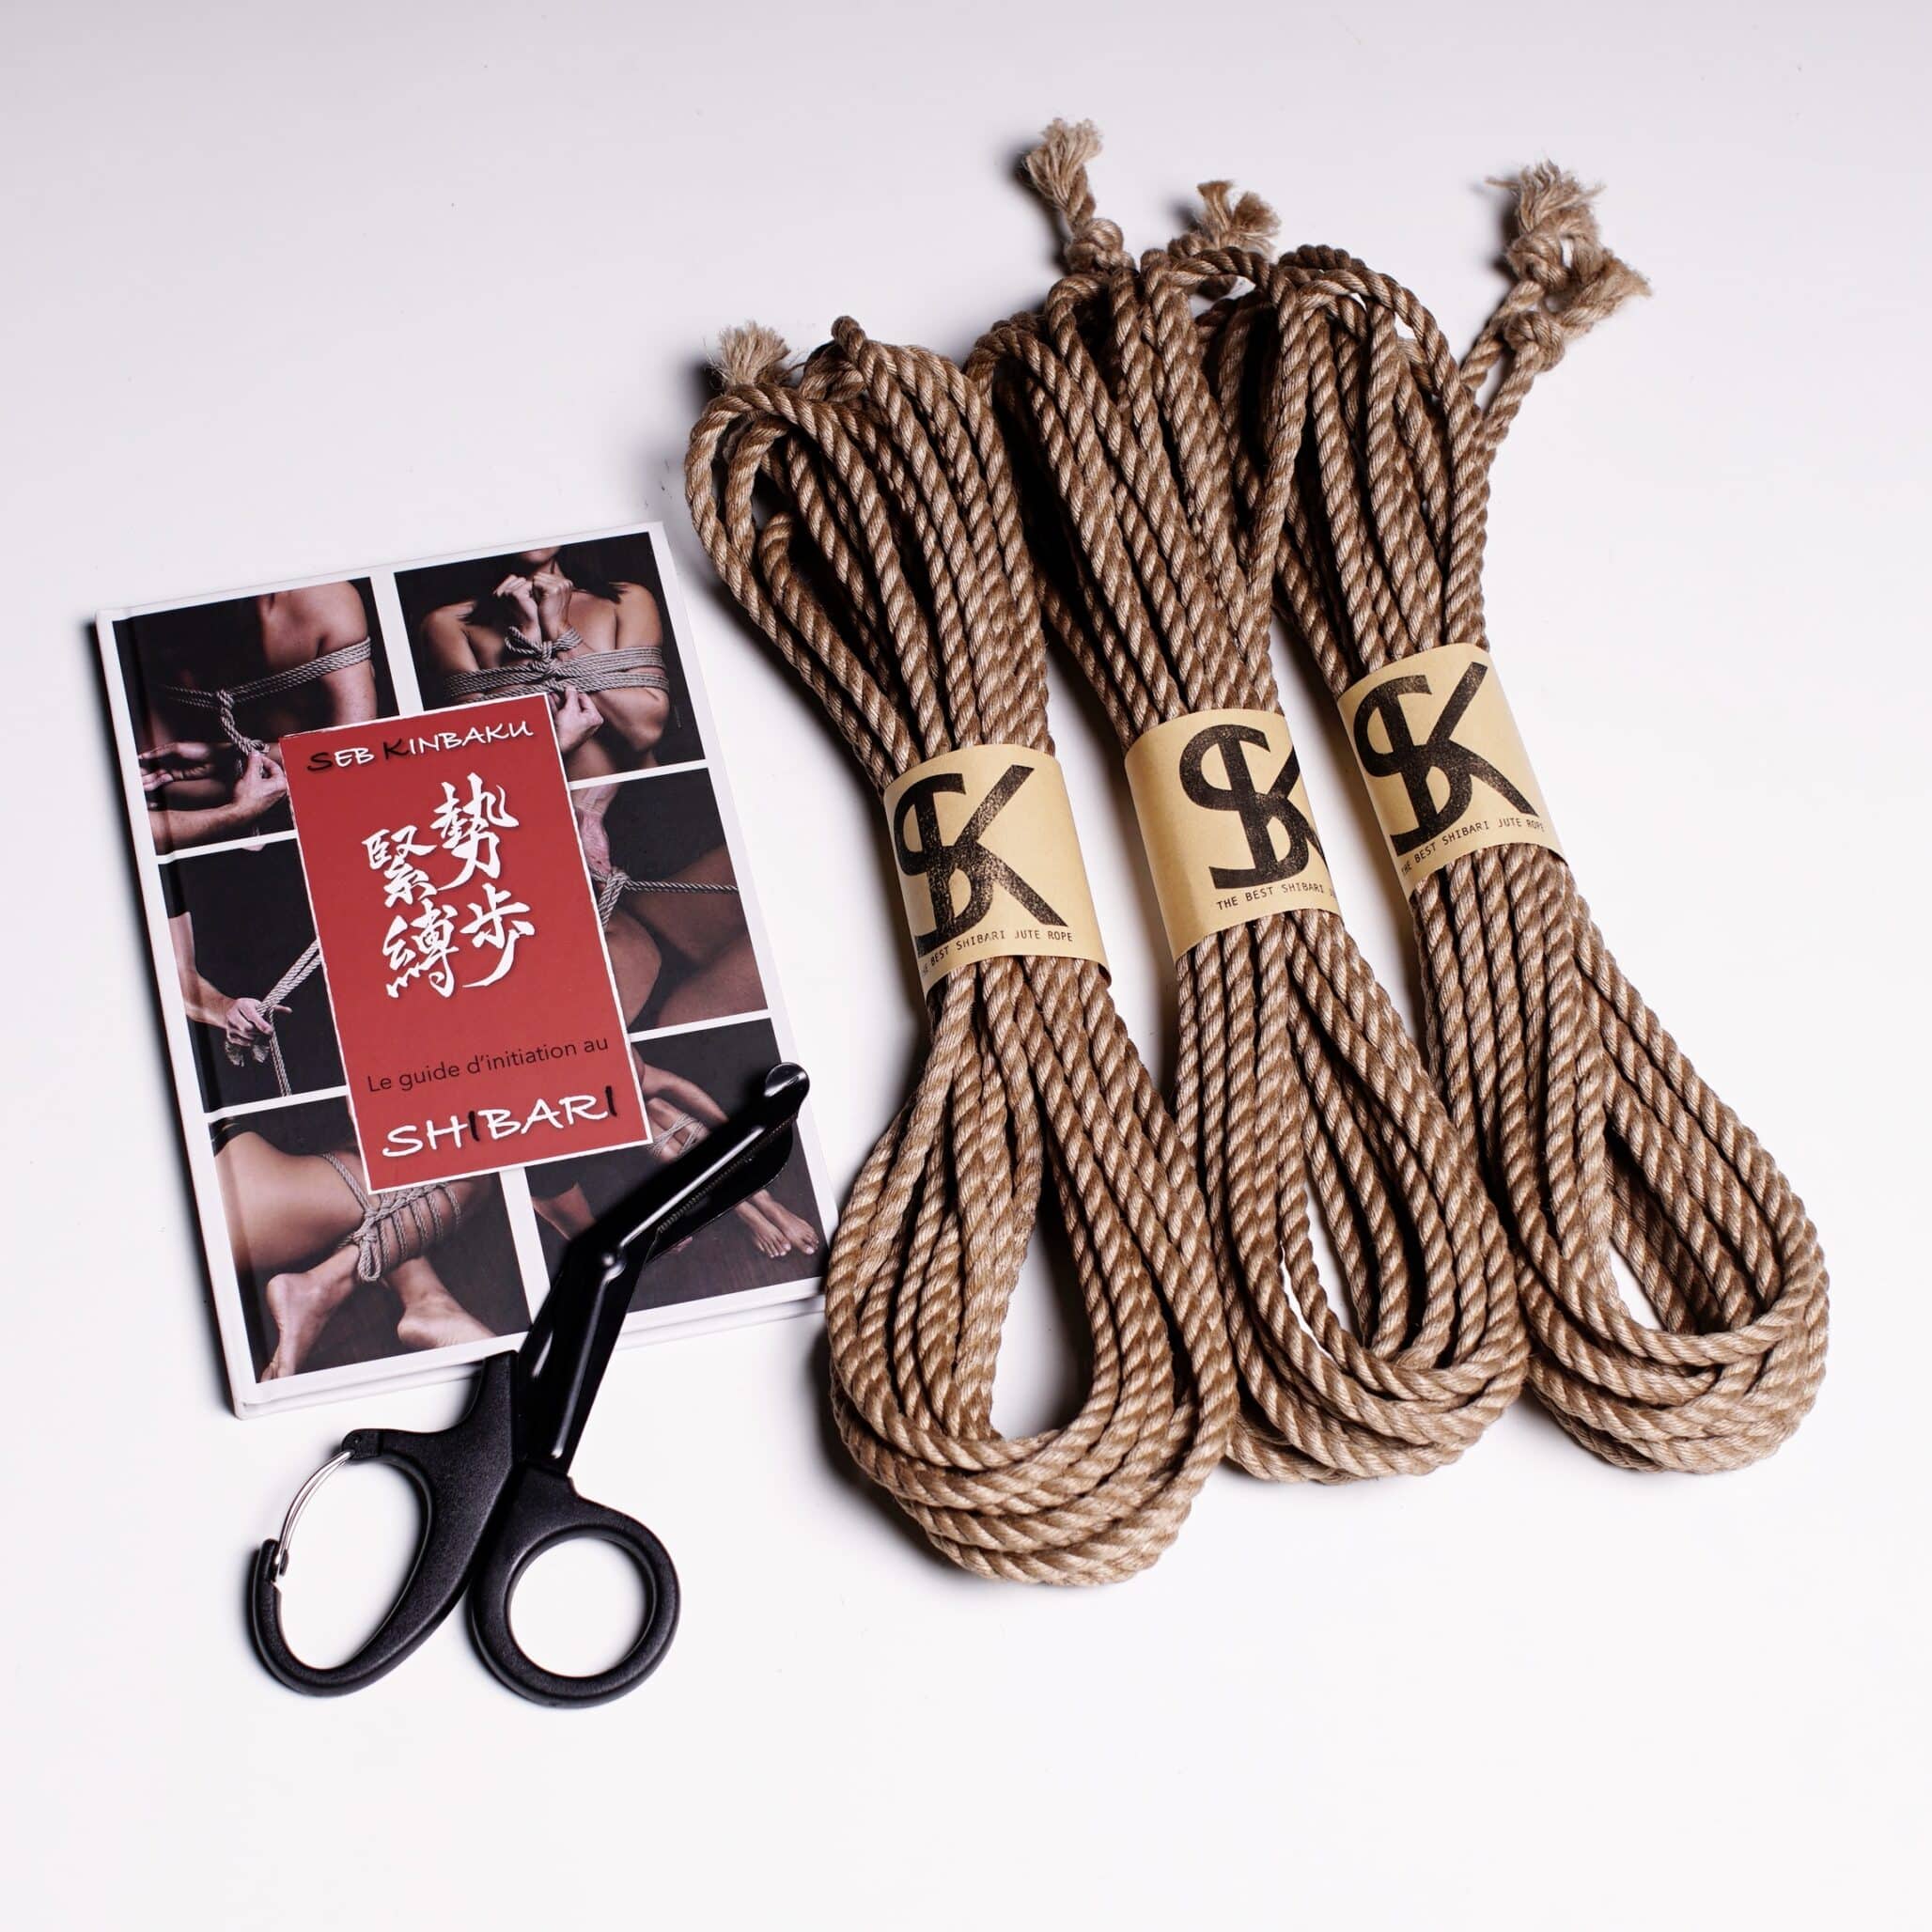 Vente de corde de shibari jute ou chanvre pour bondage, kinbaku et shibari